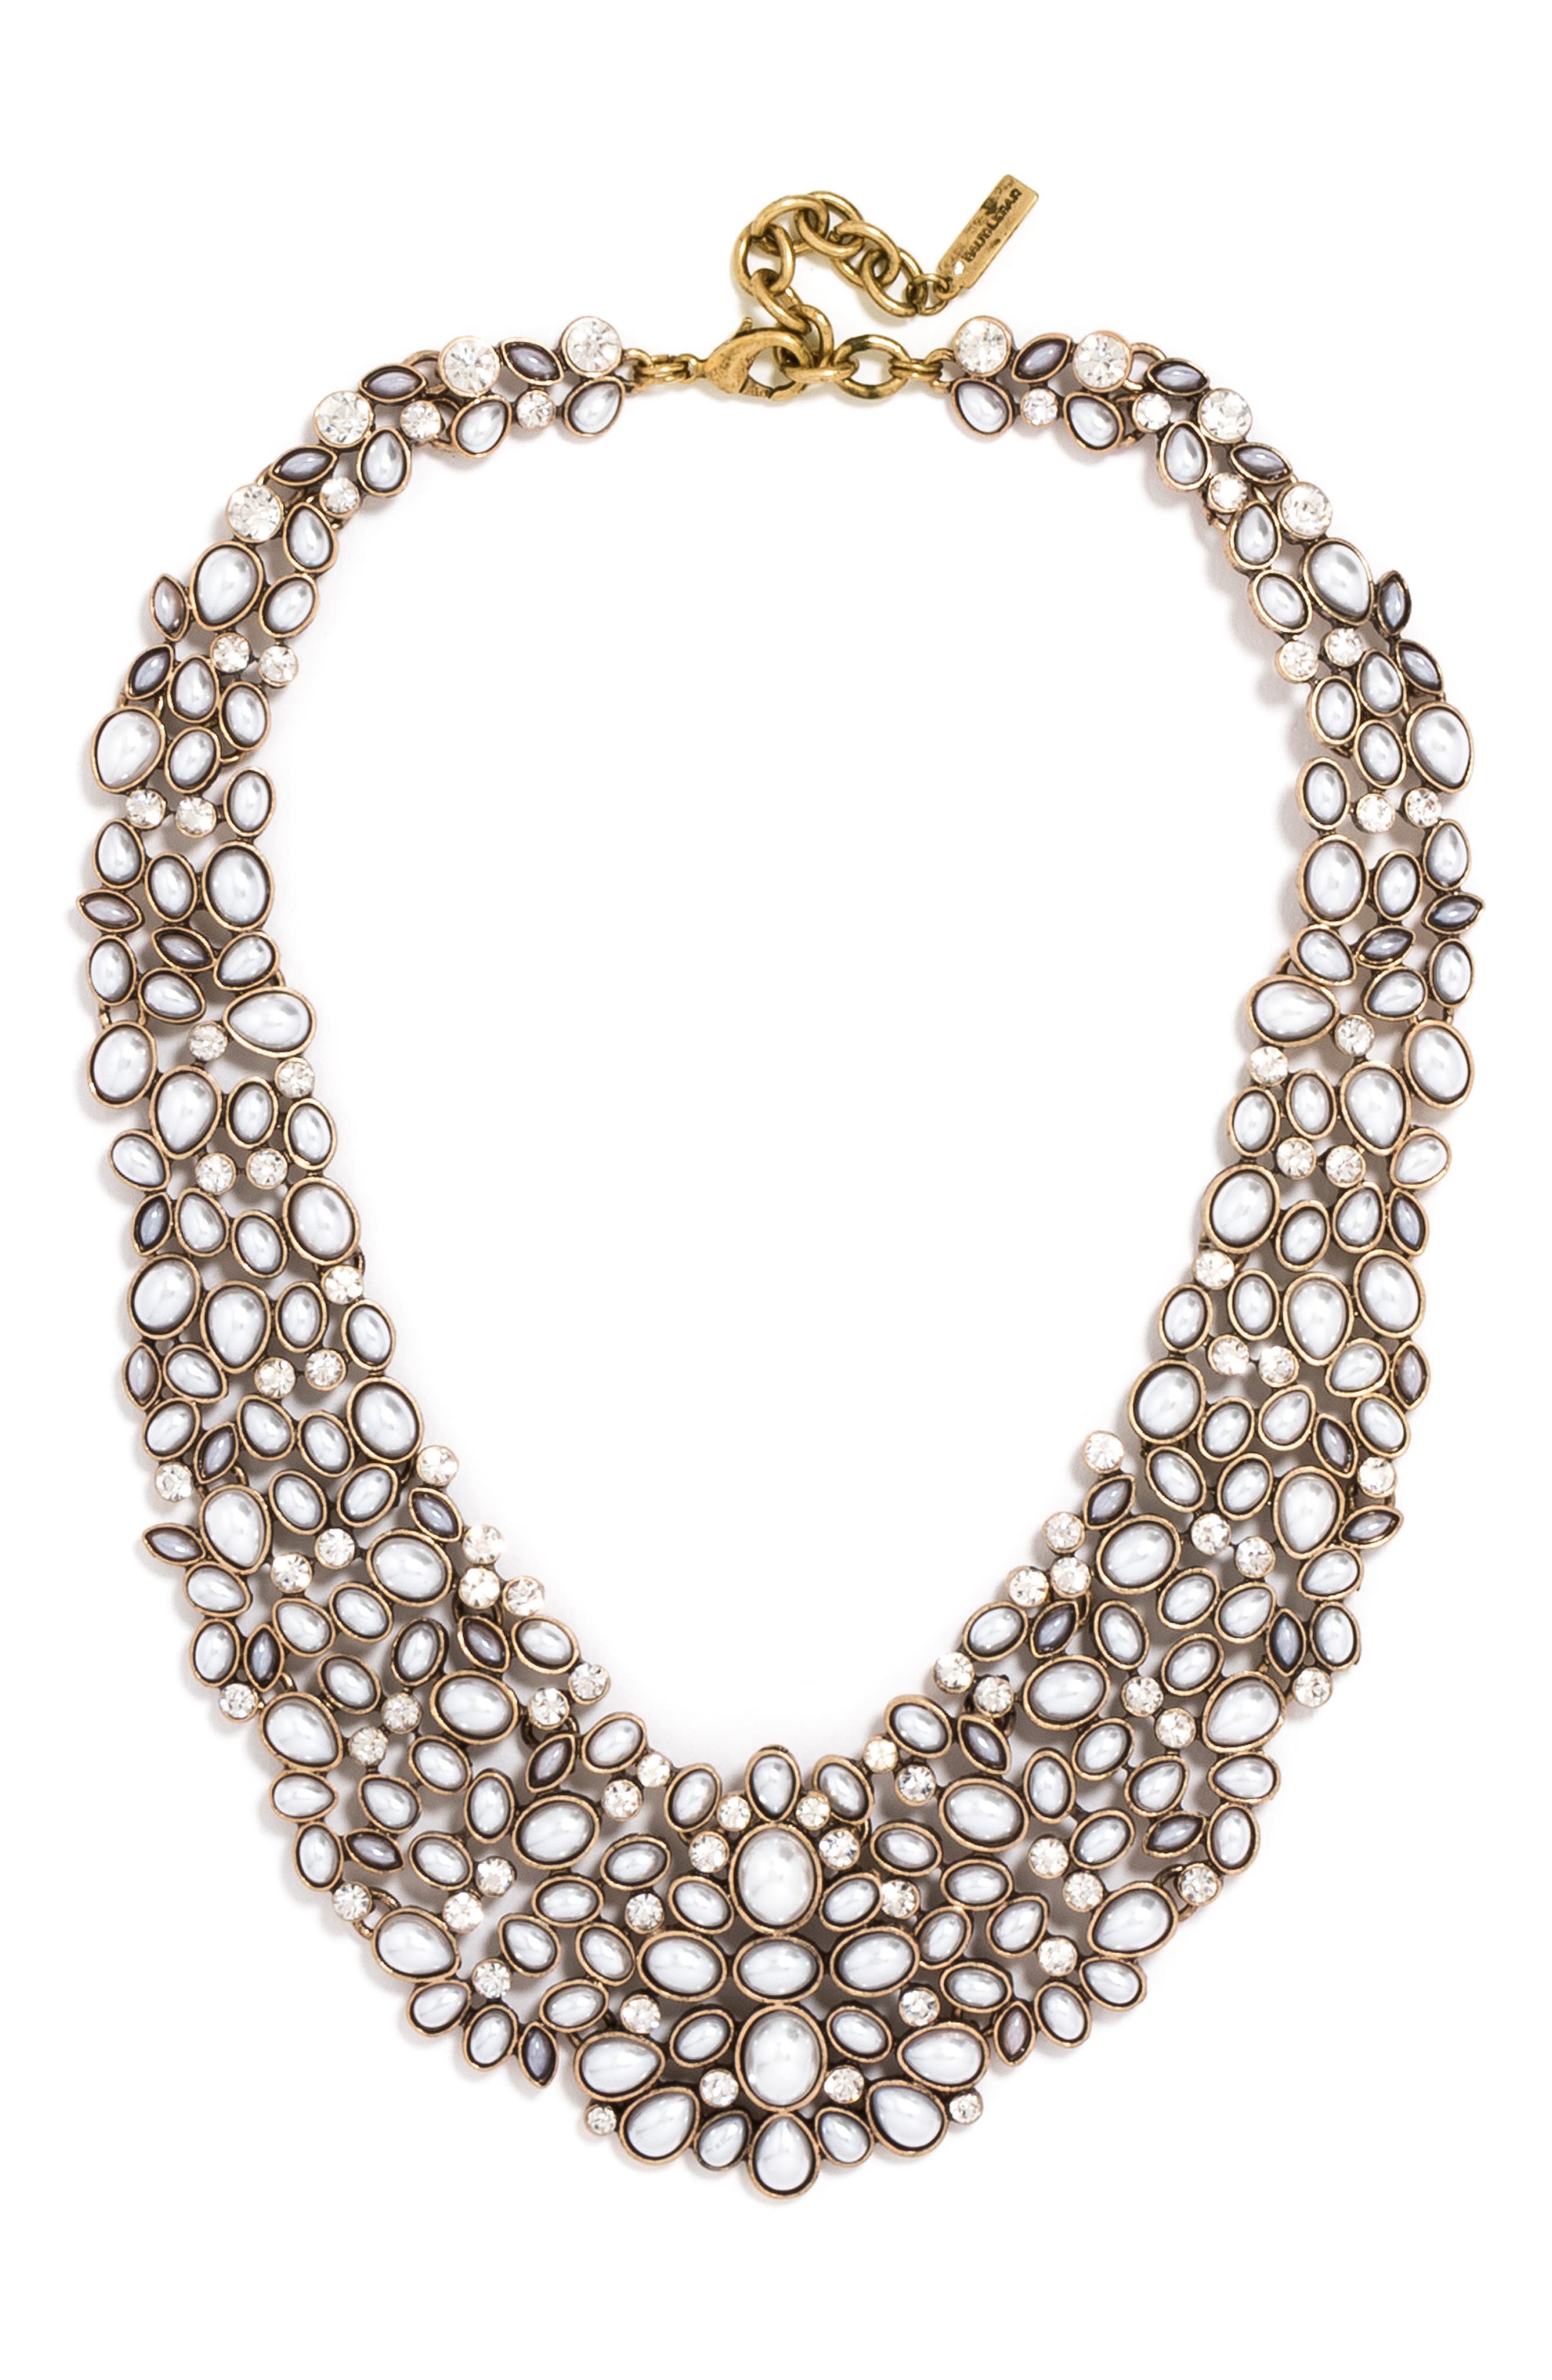 Women Choker Crystal Chunky Charm Pendant Bib Statement Collar Pearl Necklace